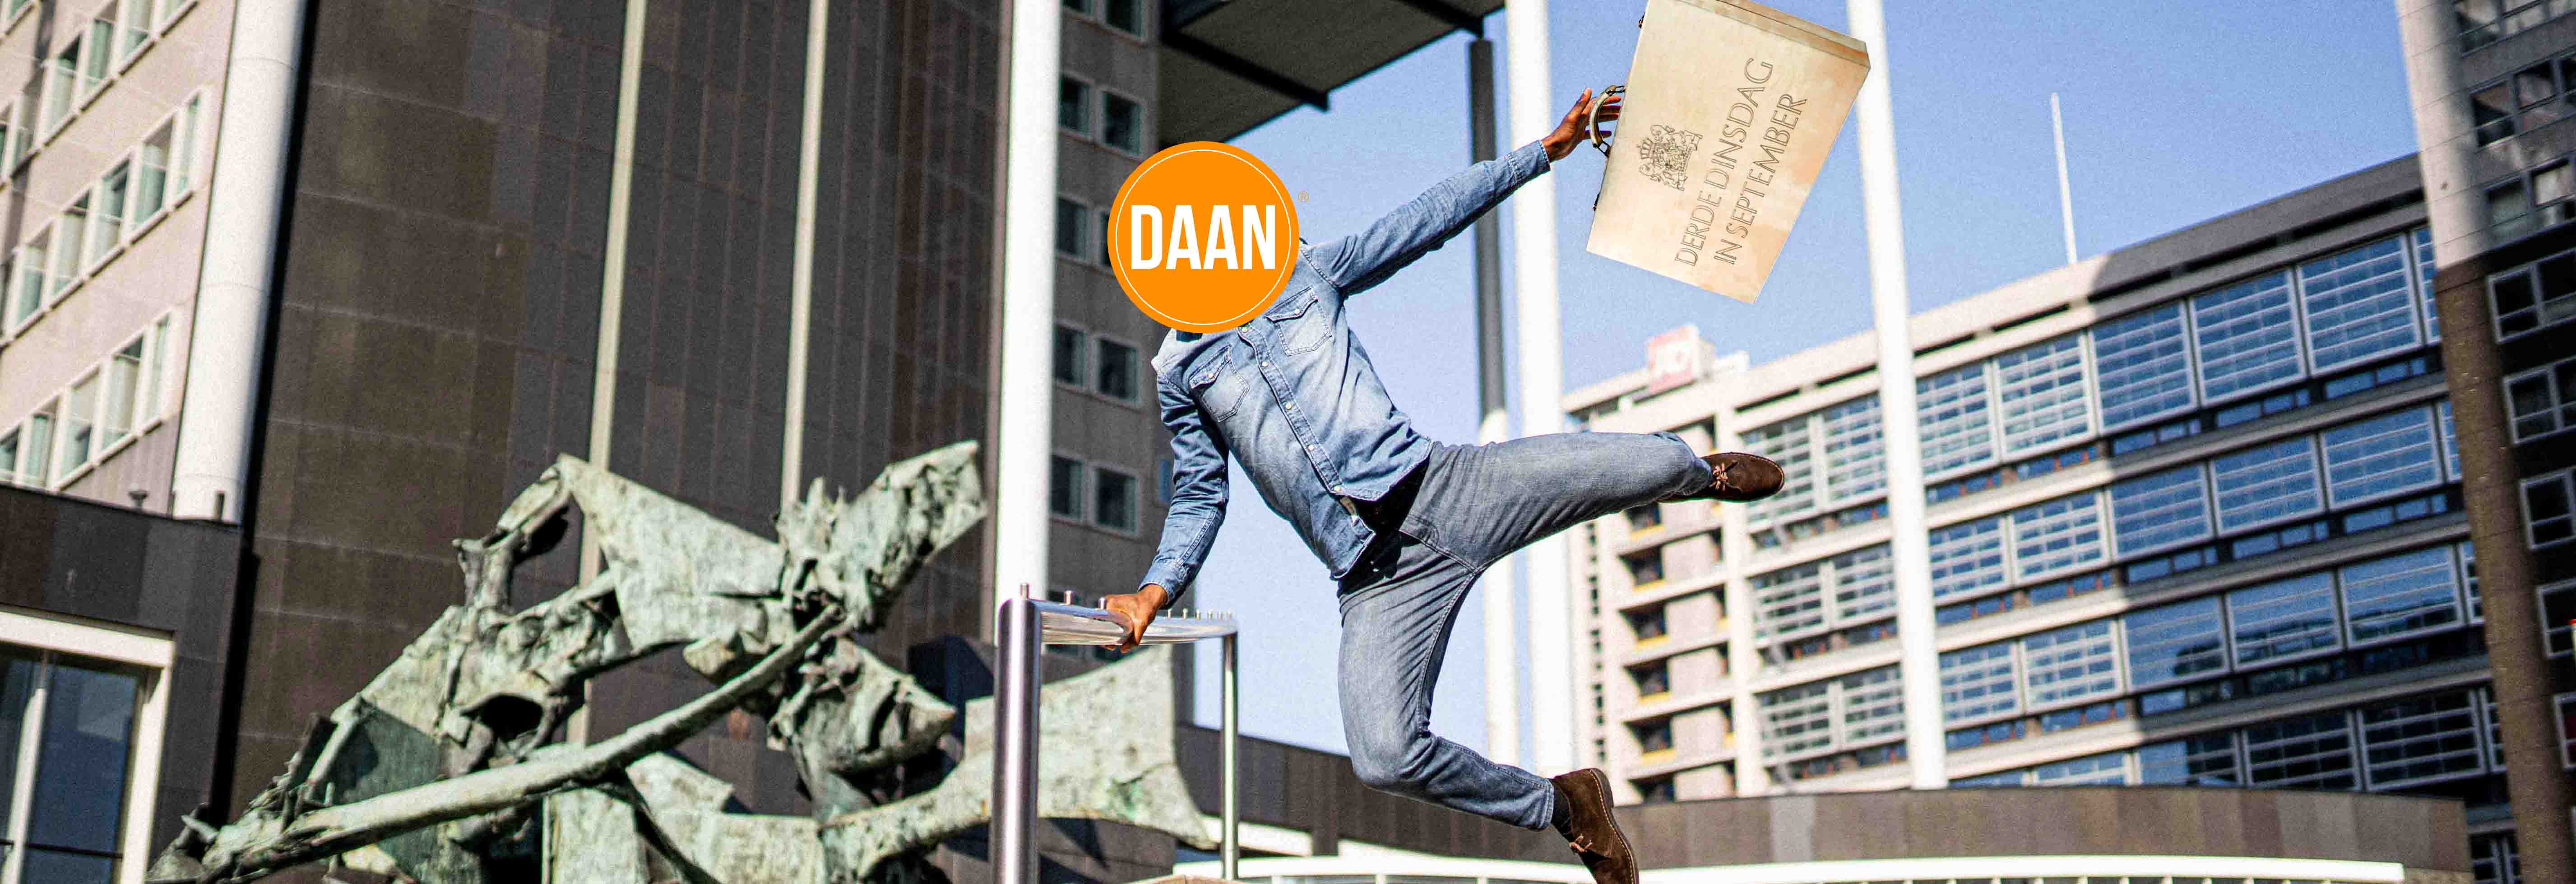 Daan | Blog overzicht